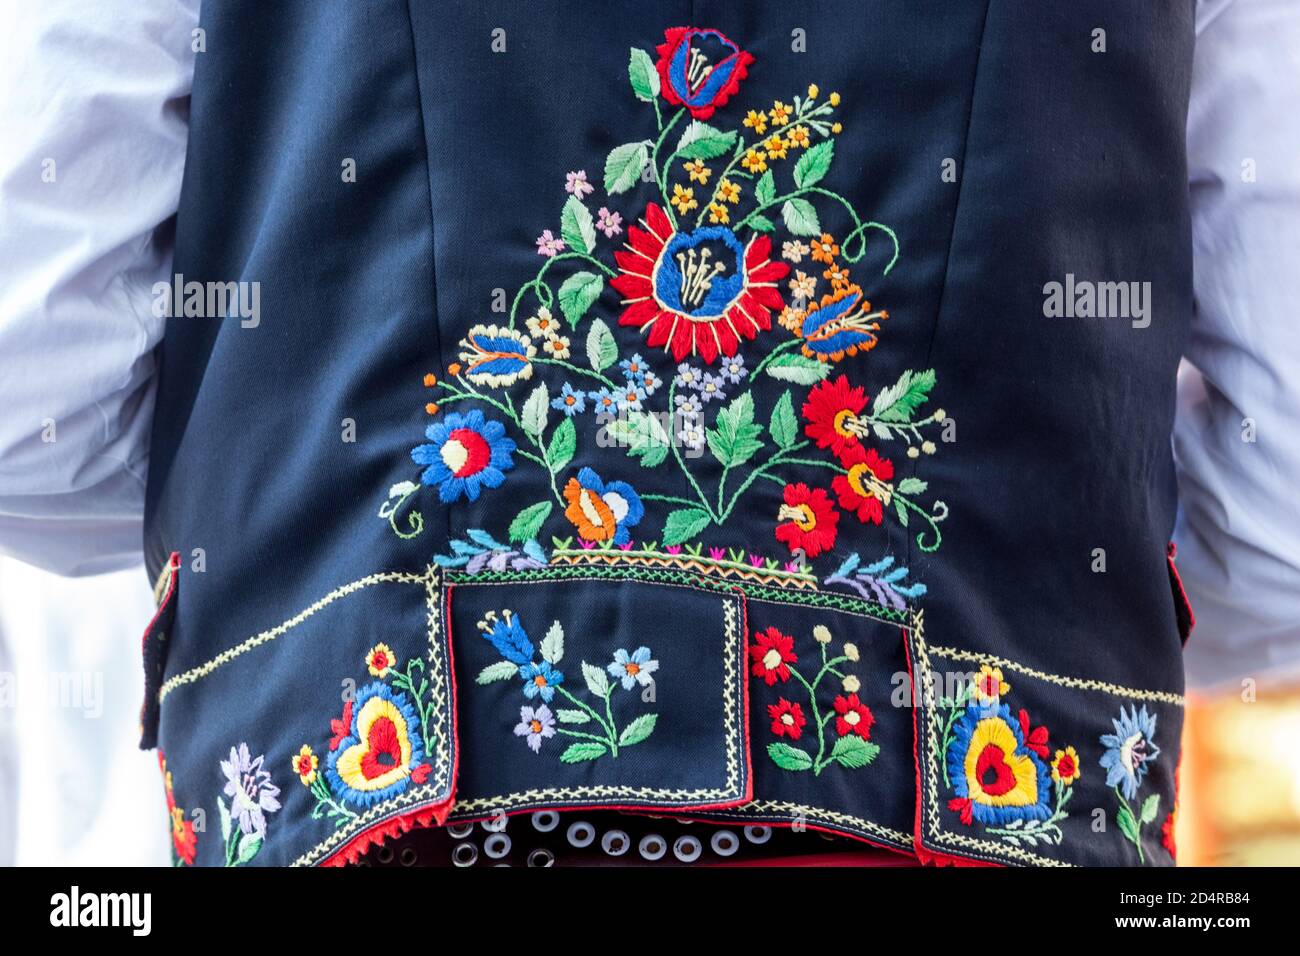 Traditional dress pattern folk Czech embroidery on folklore costume from  South Moravia Czech Republic Europe Stock Photo - Alamy